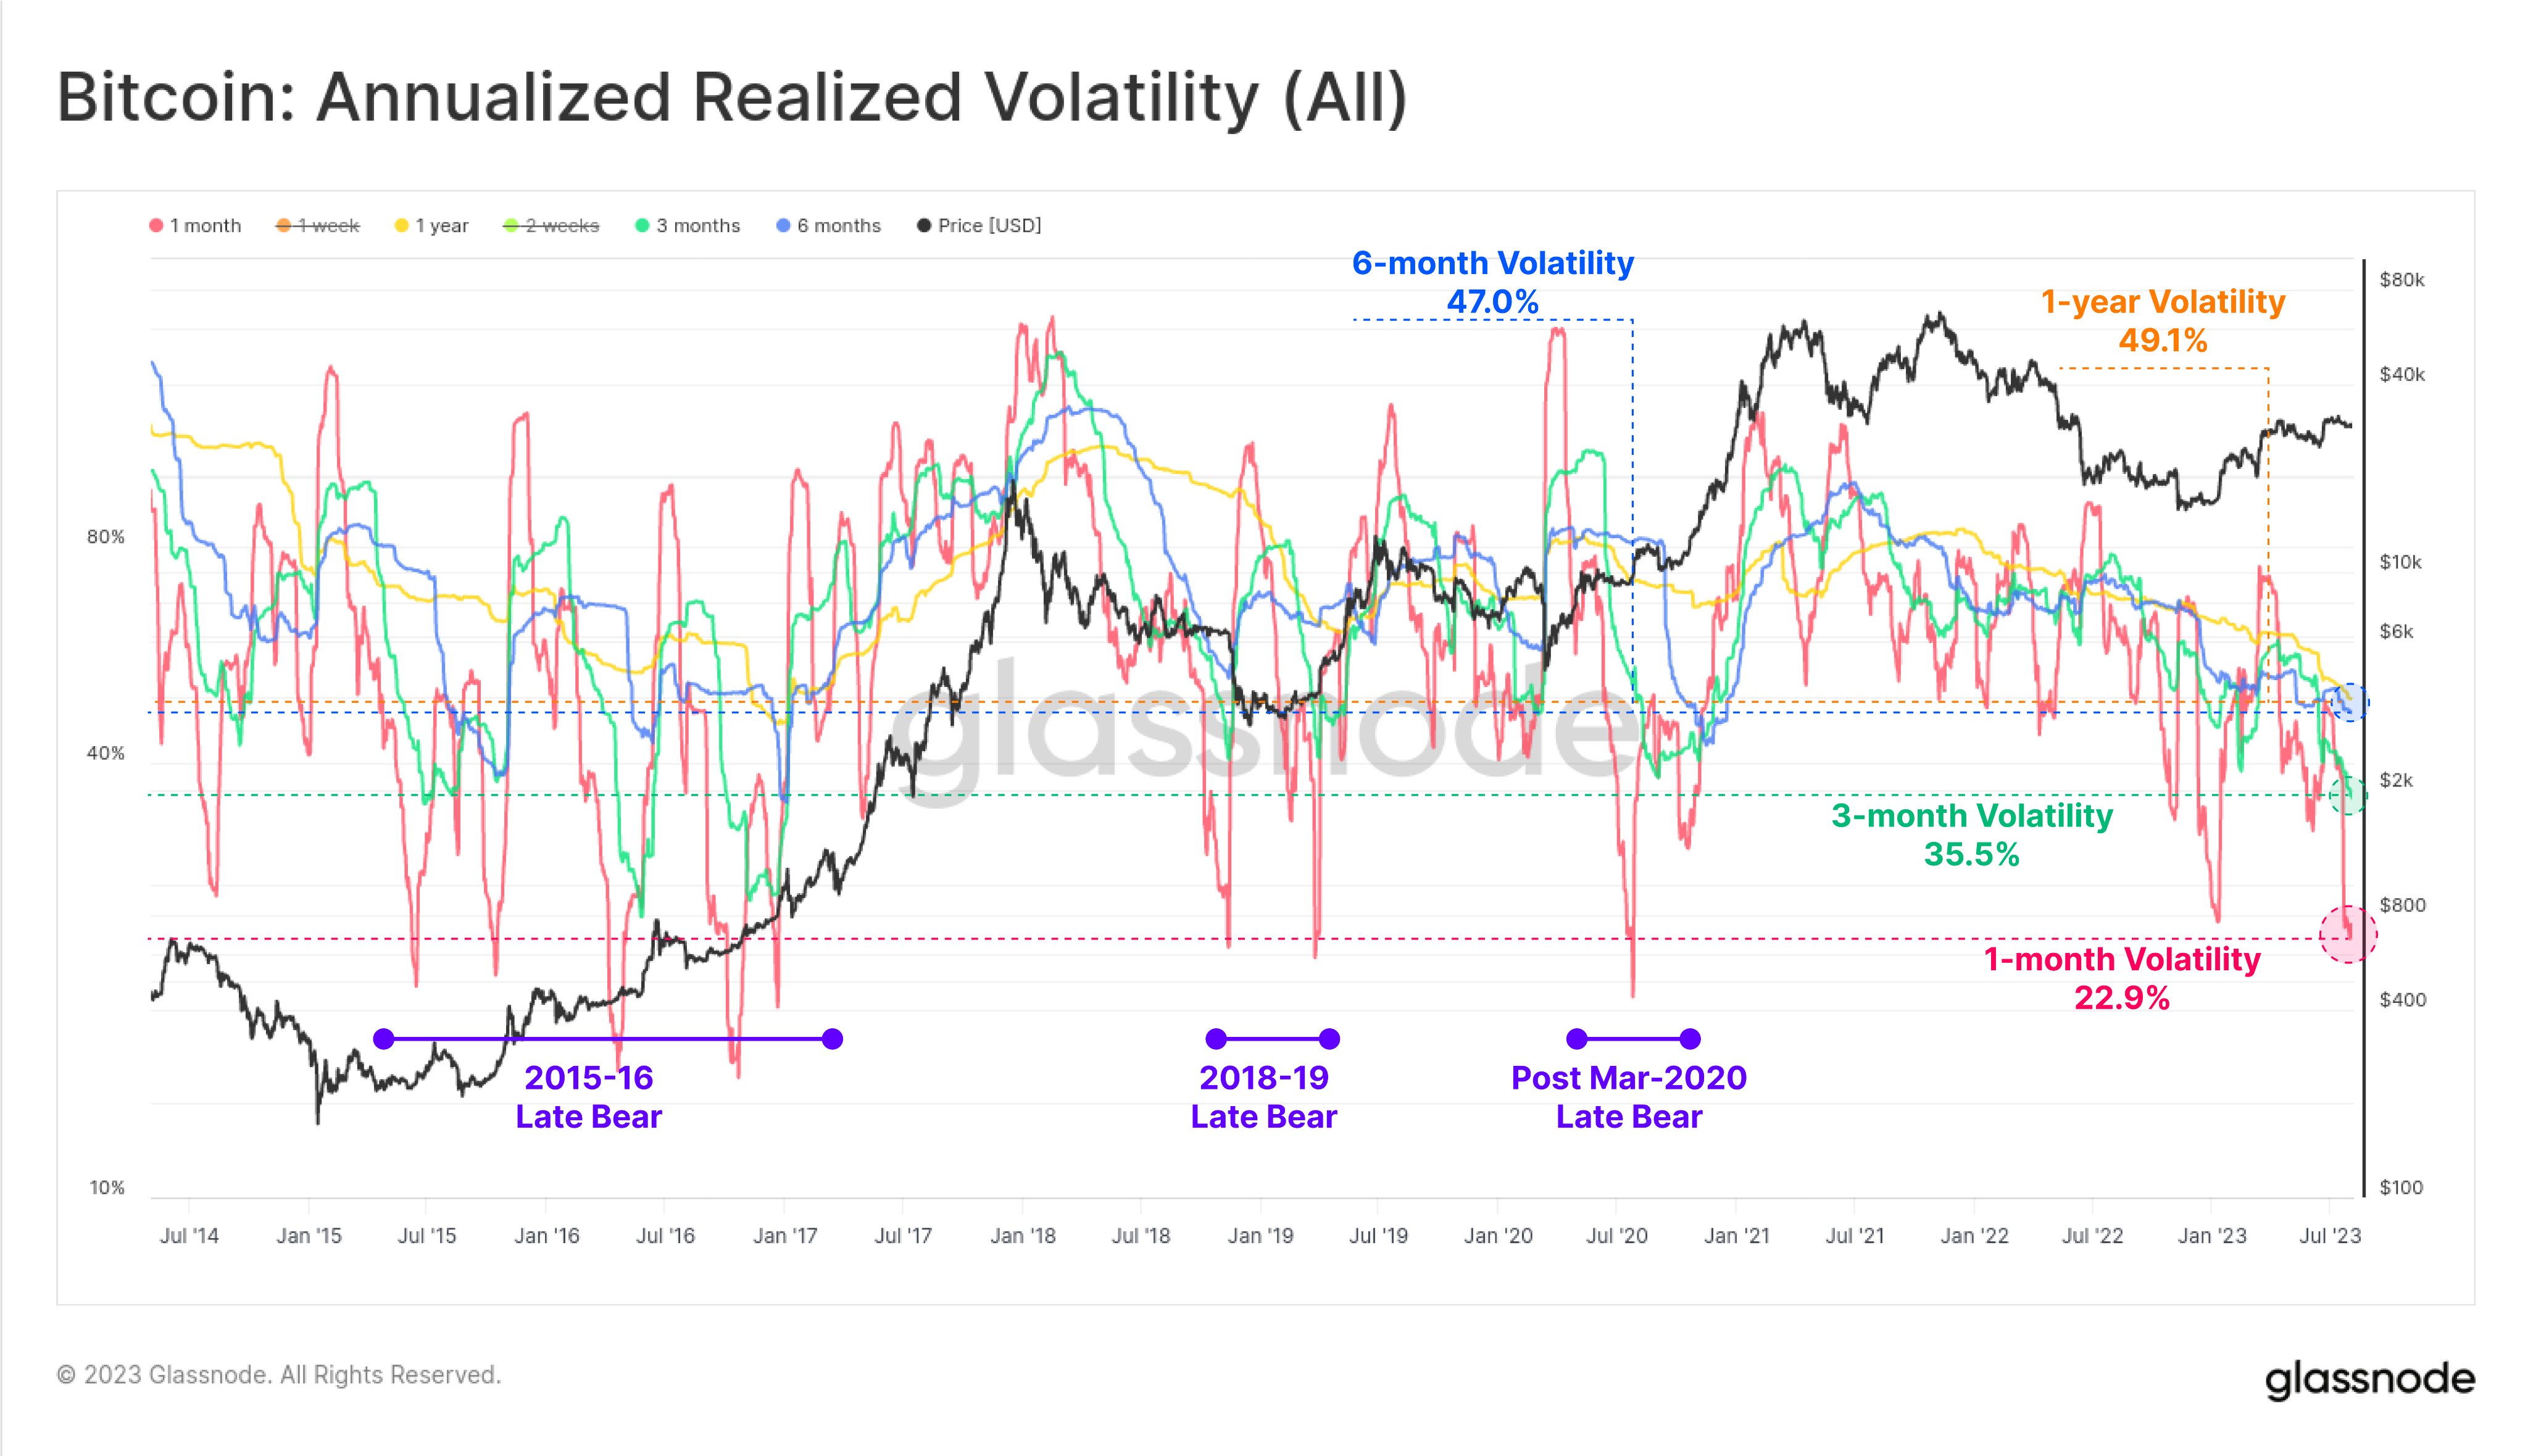  bitcoin price volatility historical lows drop seen 